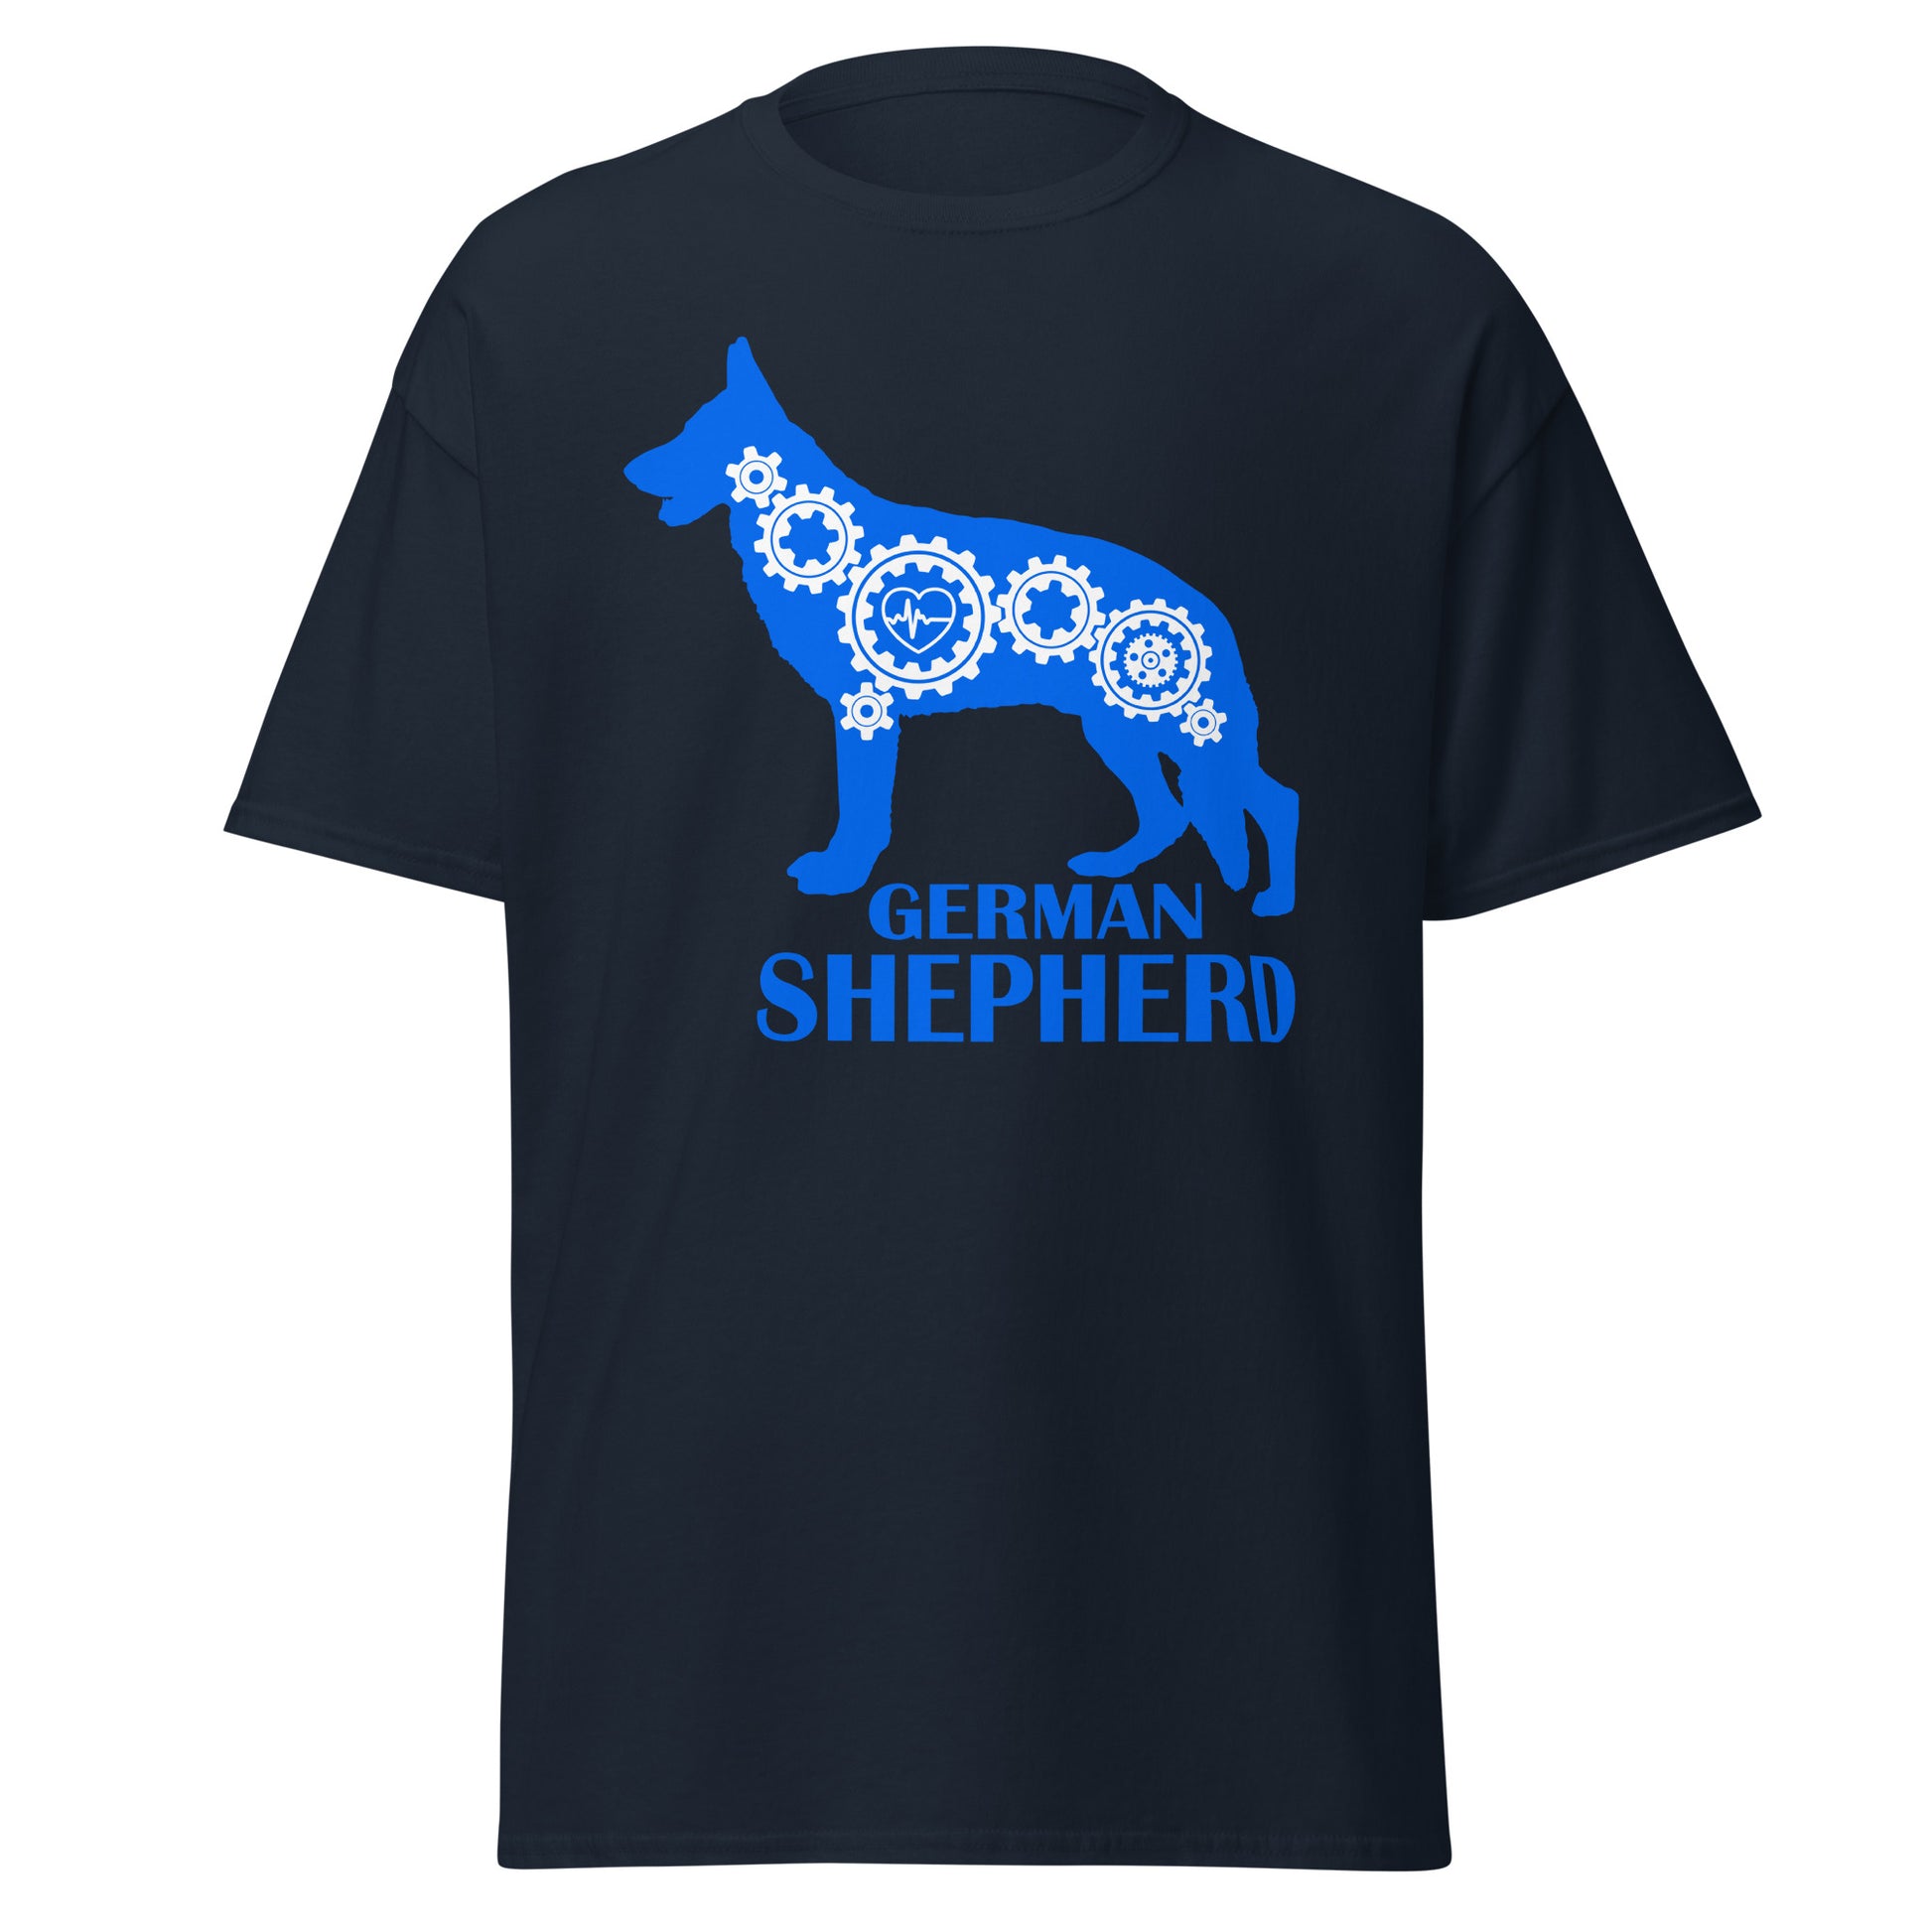 German Shepherd Bionic men’s navy t-shirt by Dog Artistry.